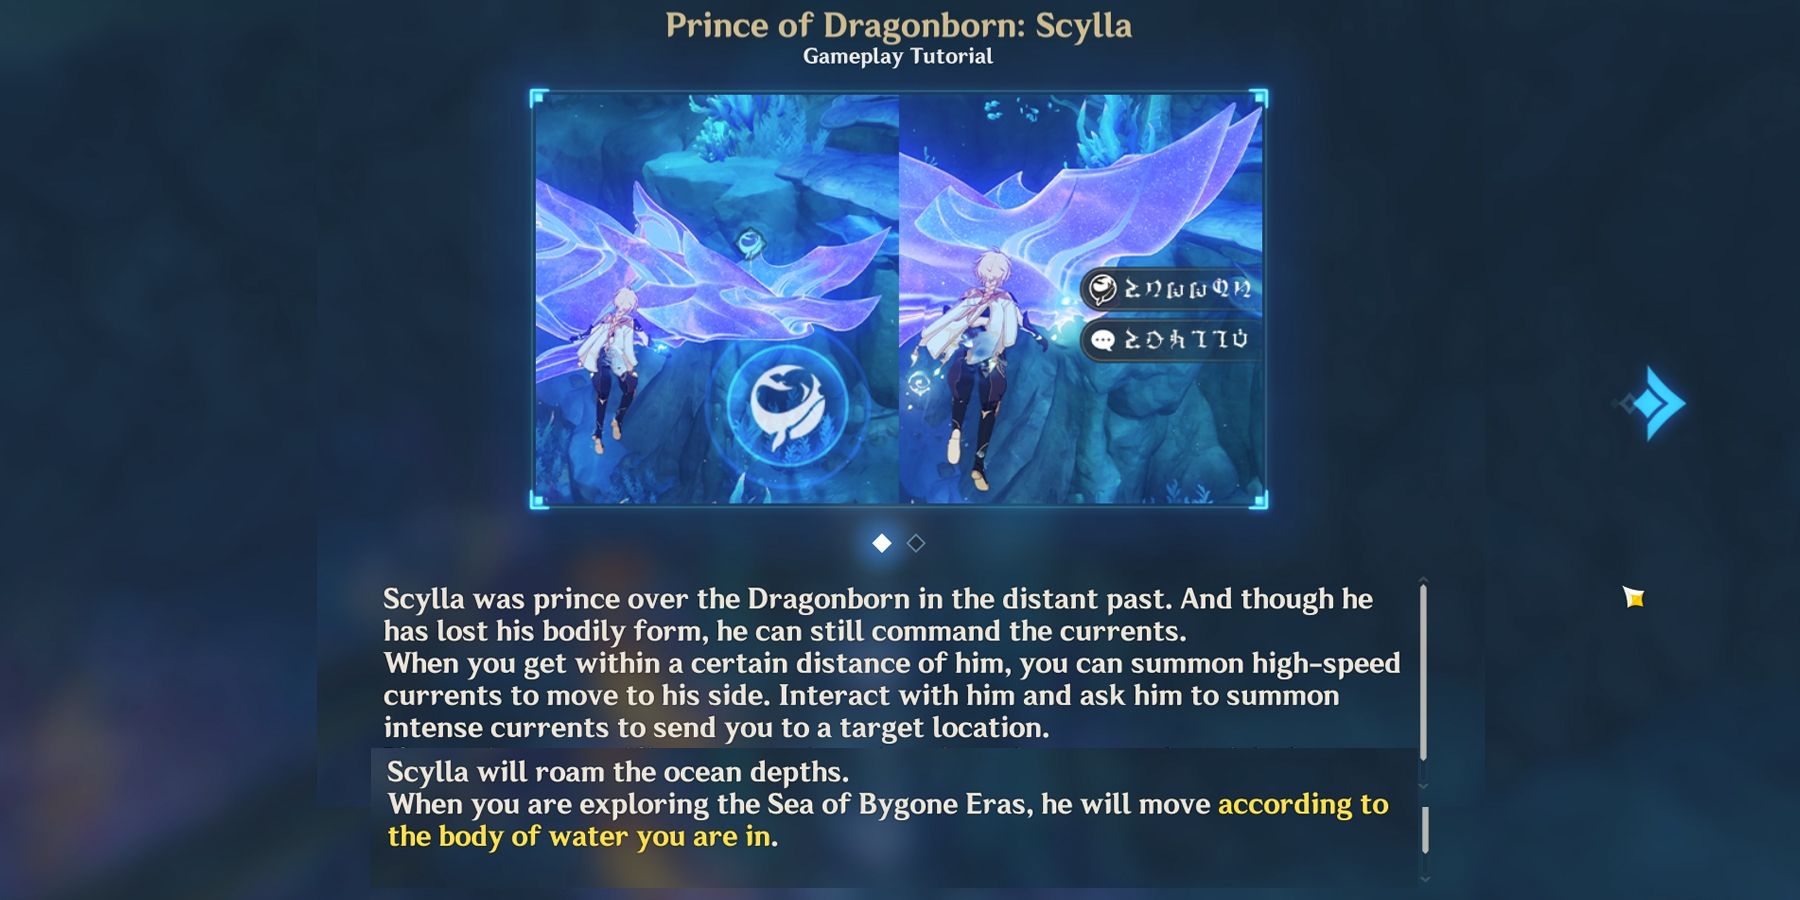 prince of dragonborn scylla tutorial guide in genshin impact